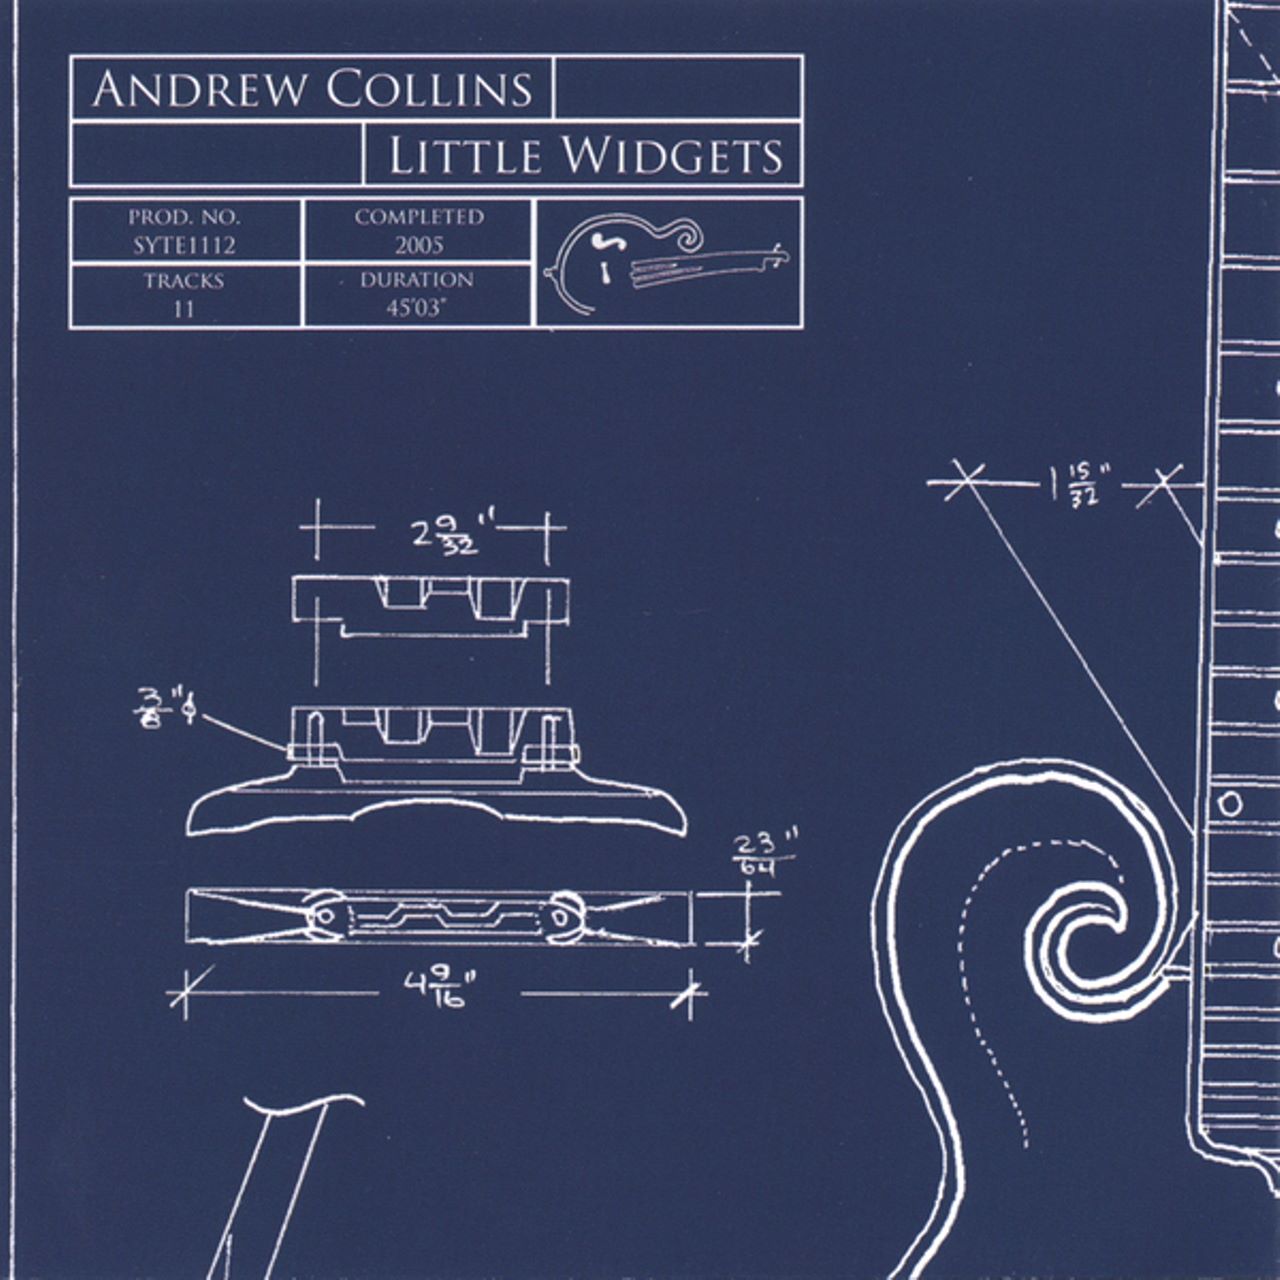 Andrew Collins - Little Widgets cover album